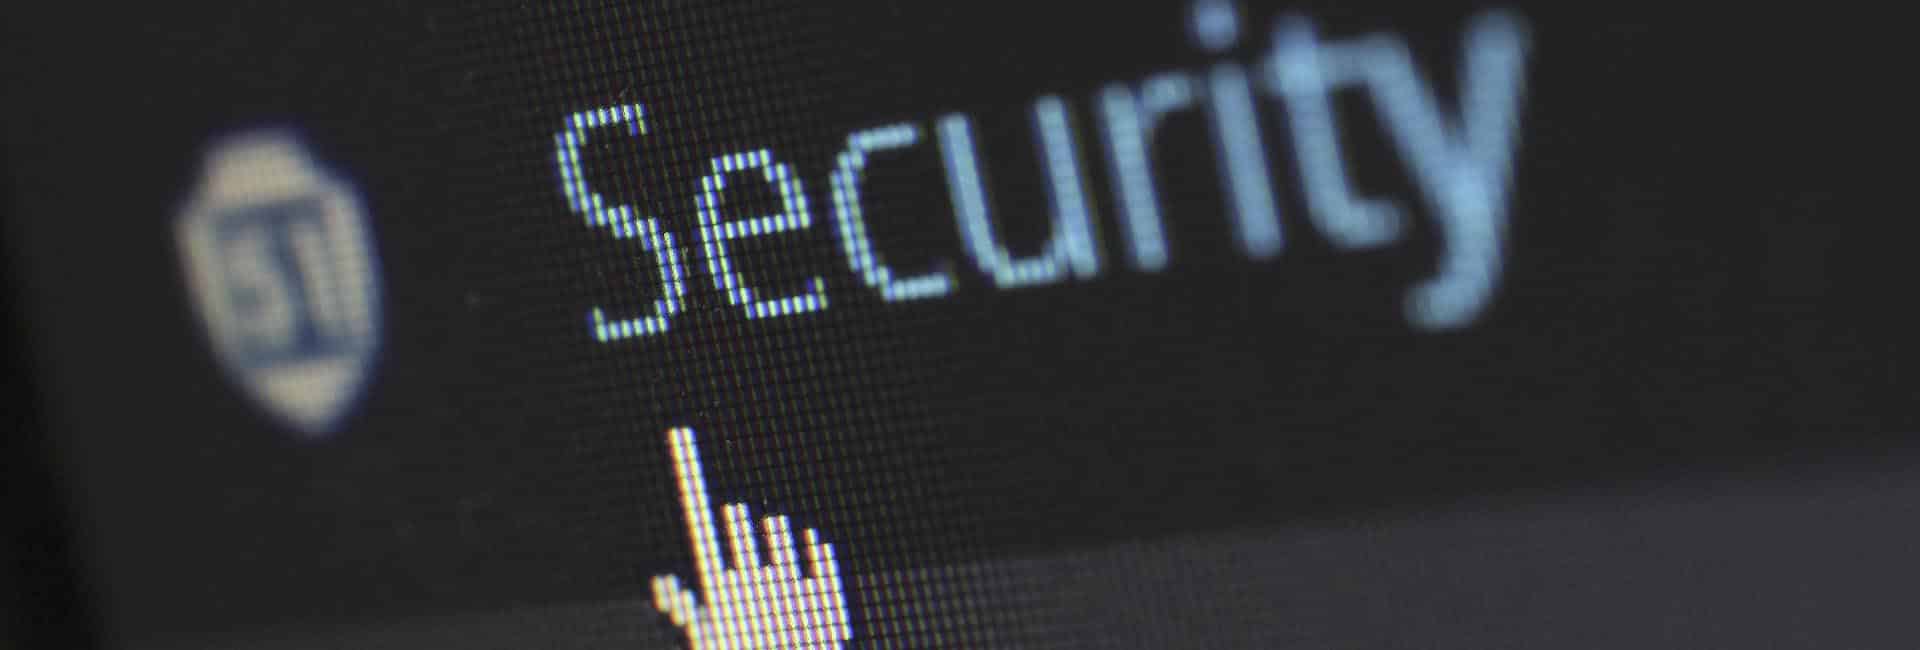 SSL certificate security